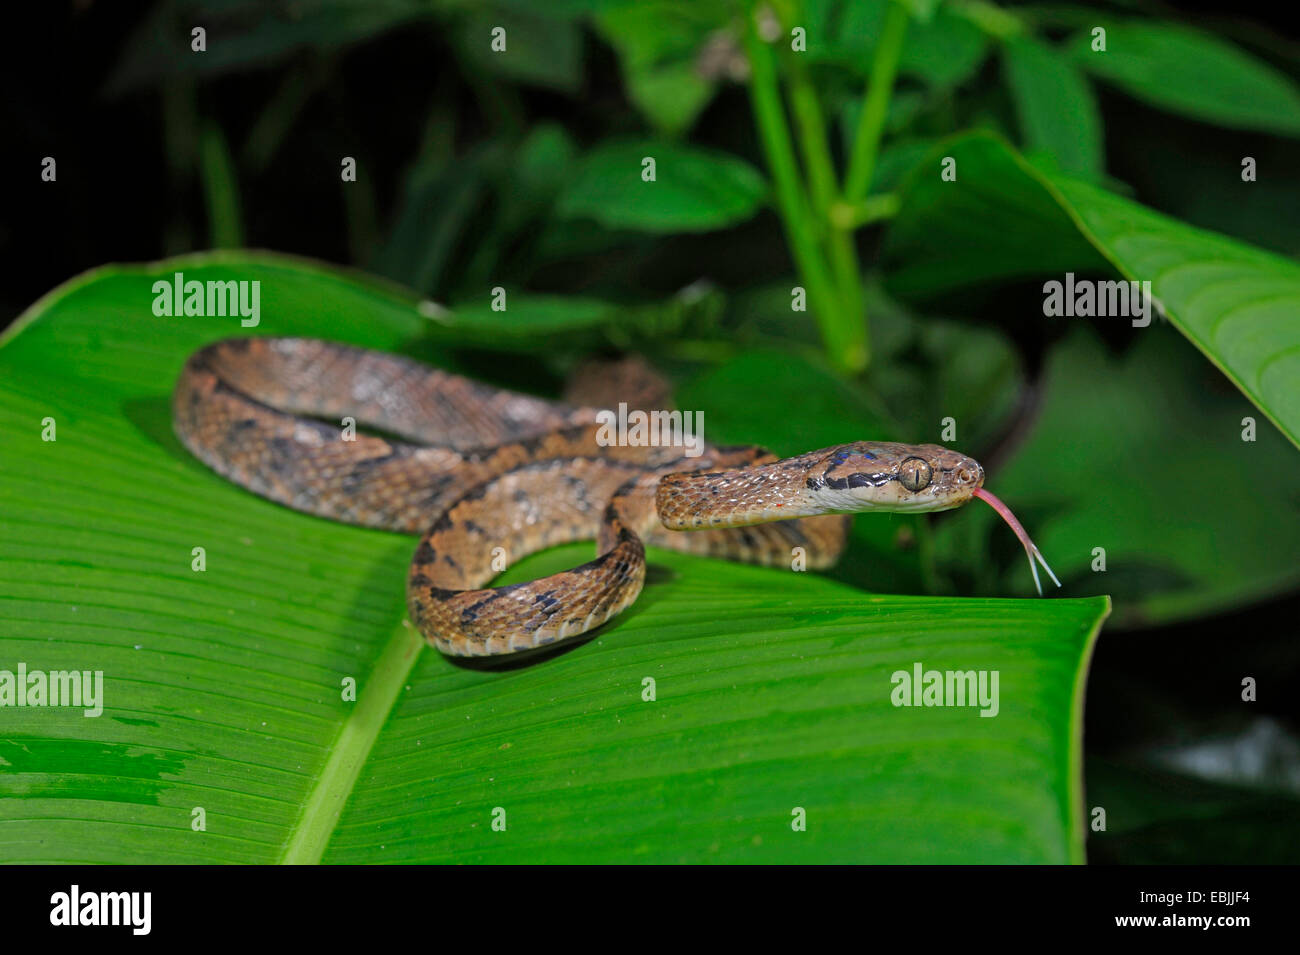 Sri Lanka cat snake (Boiga ceylonensis), lying on a leaf flicking, Sri Lanka, Sinharaja Forest National Park Stock Photo